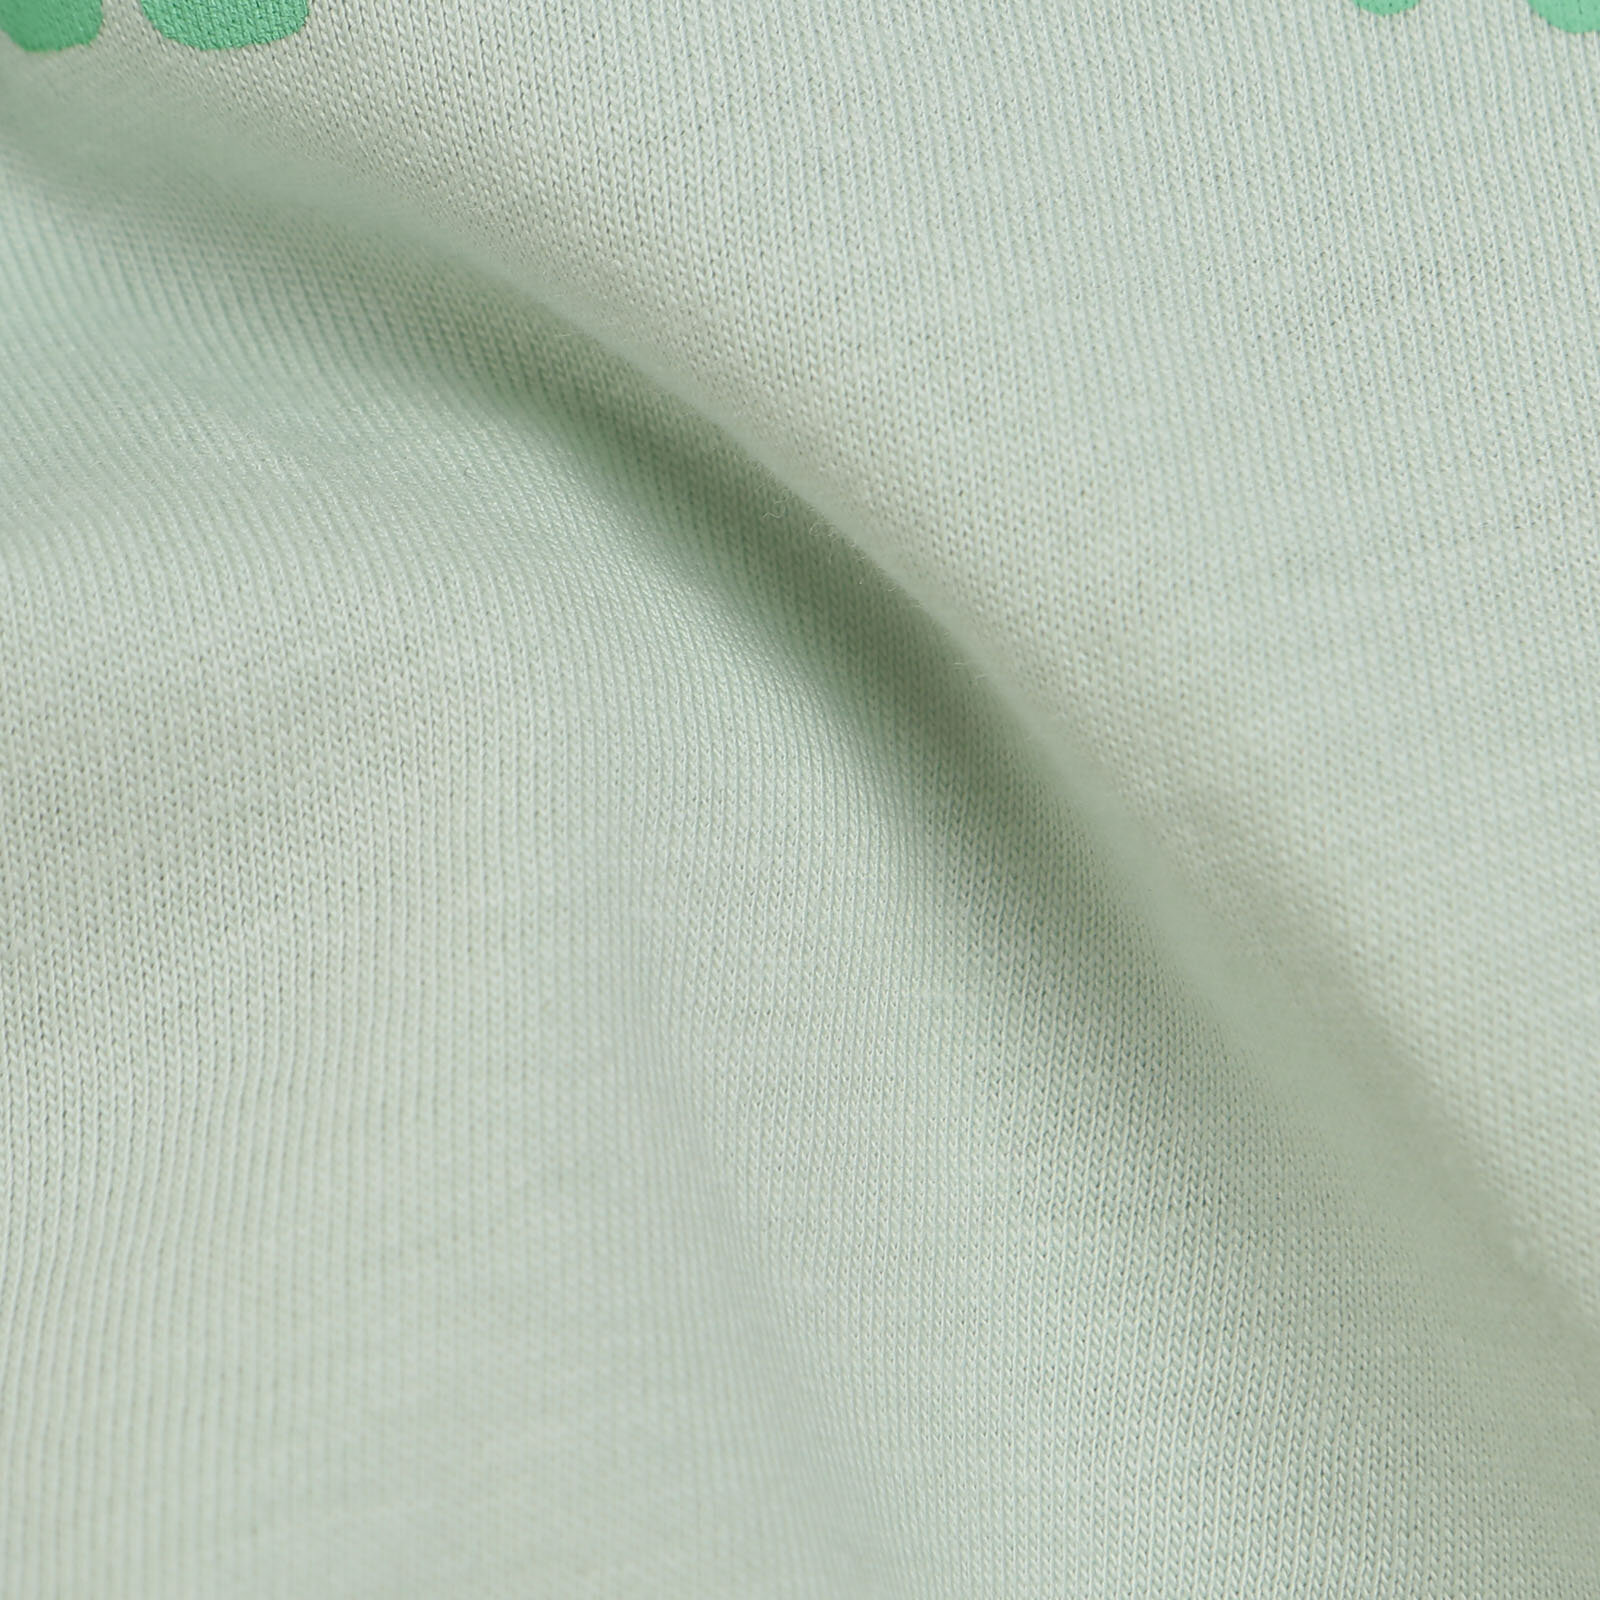 Renkli Yaz Tshirt-Şort Erkek Bebek